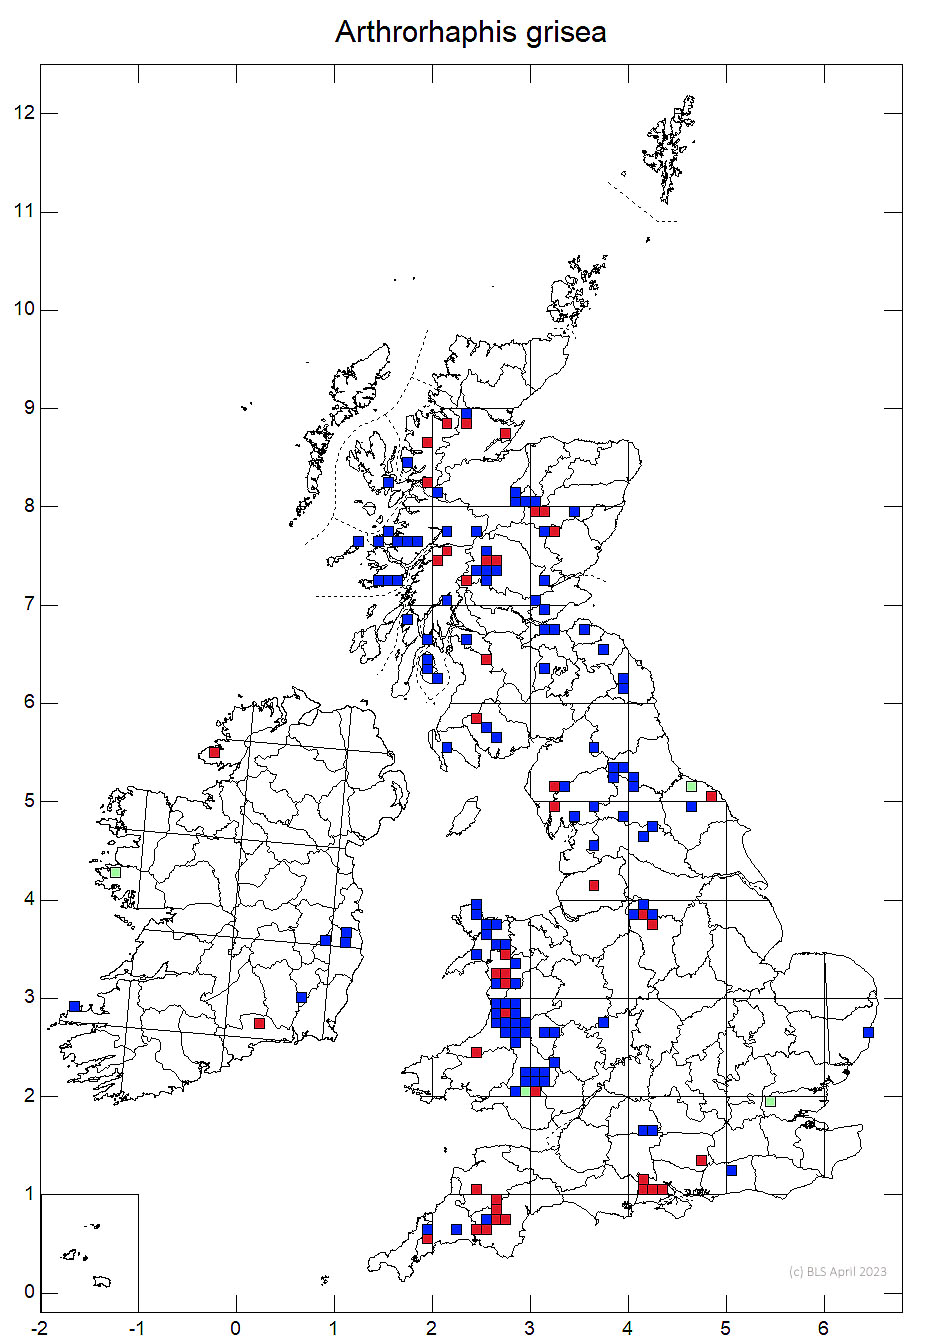 Arthrorhaphis grisea 10km sq distribution map